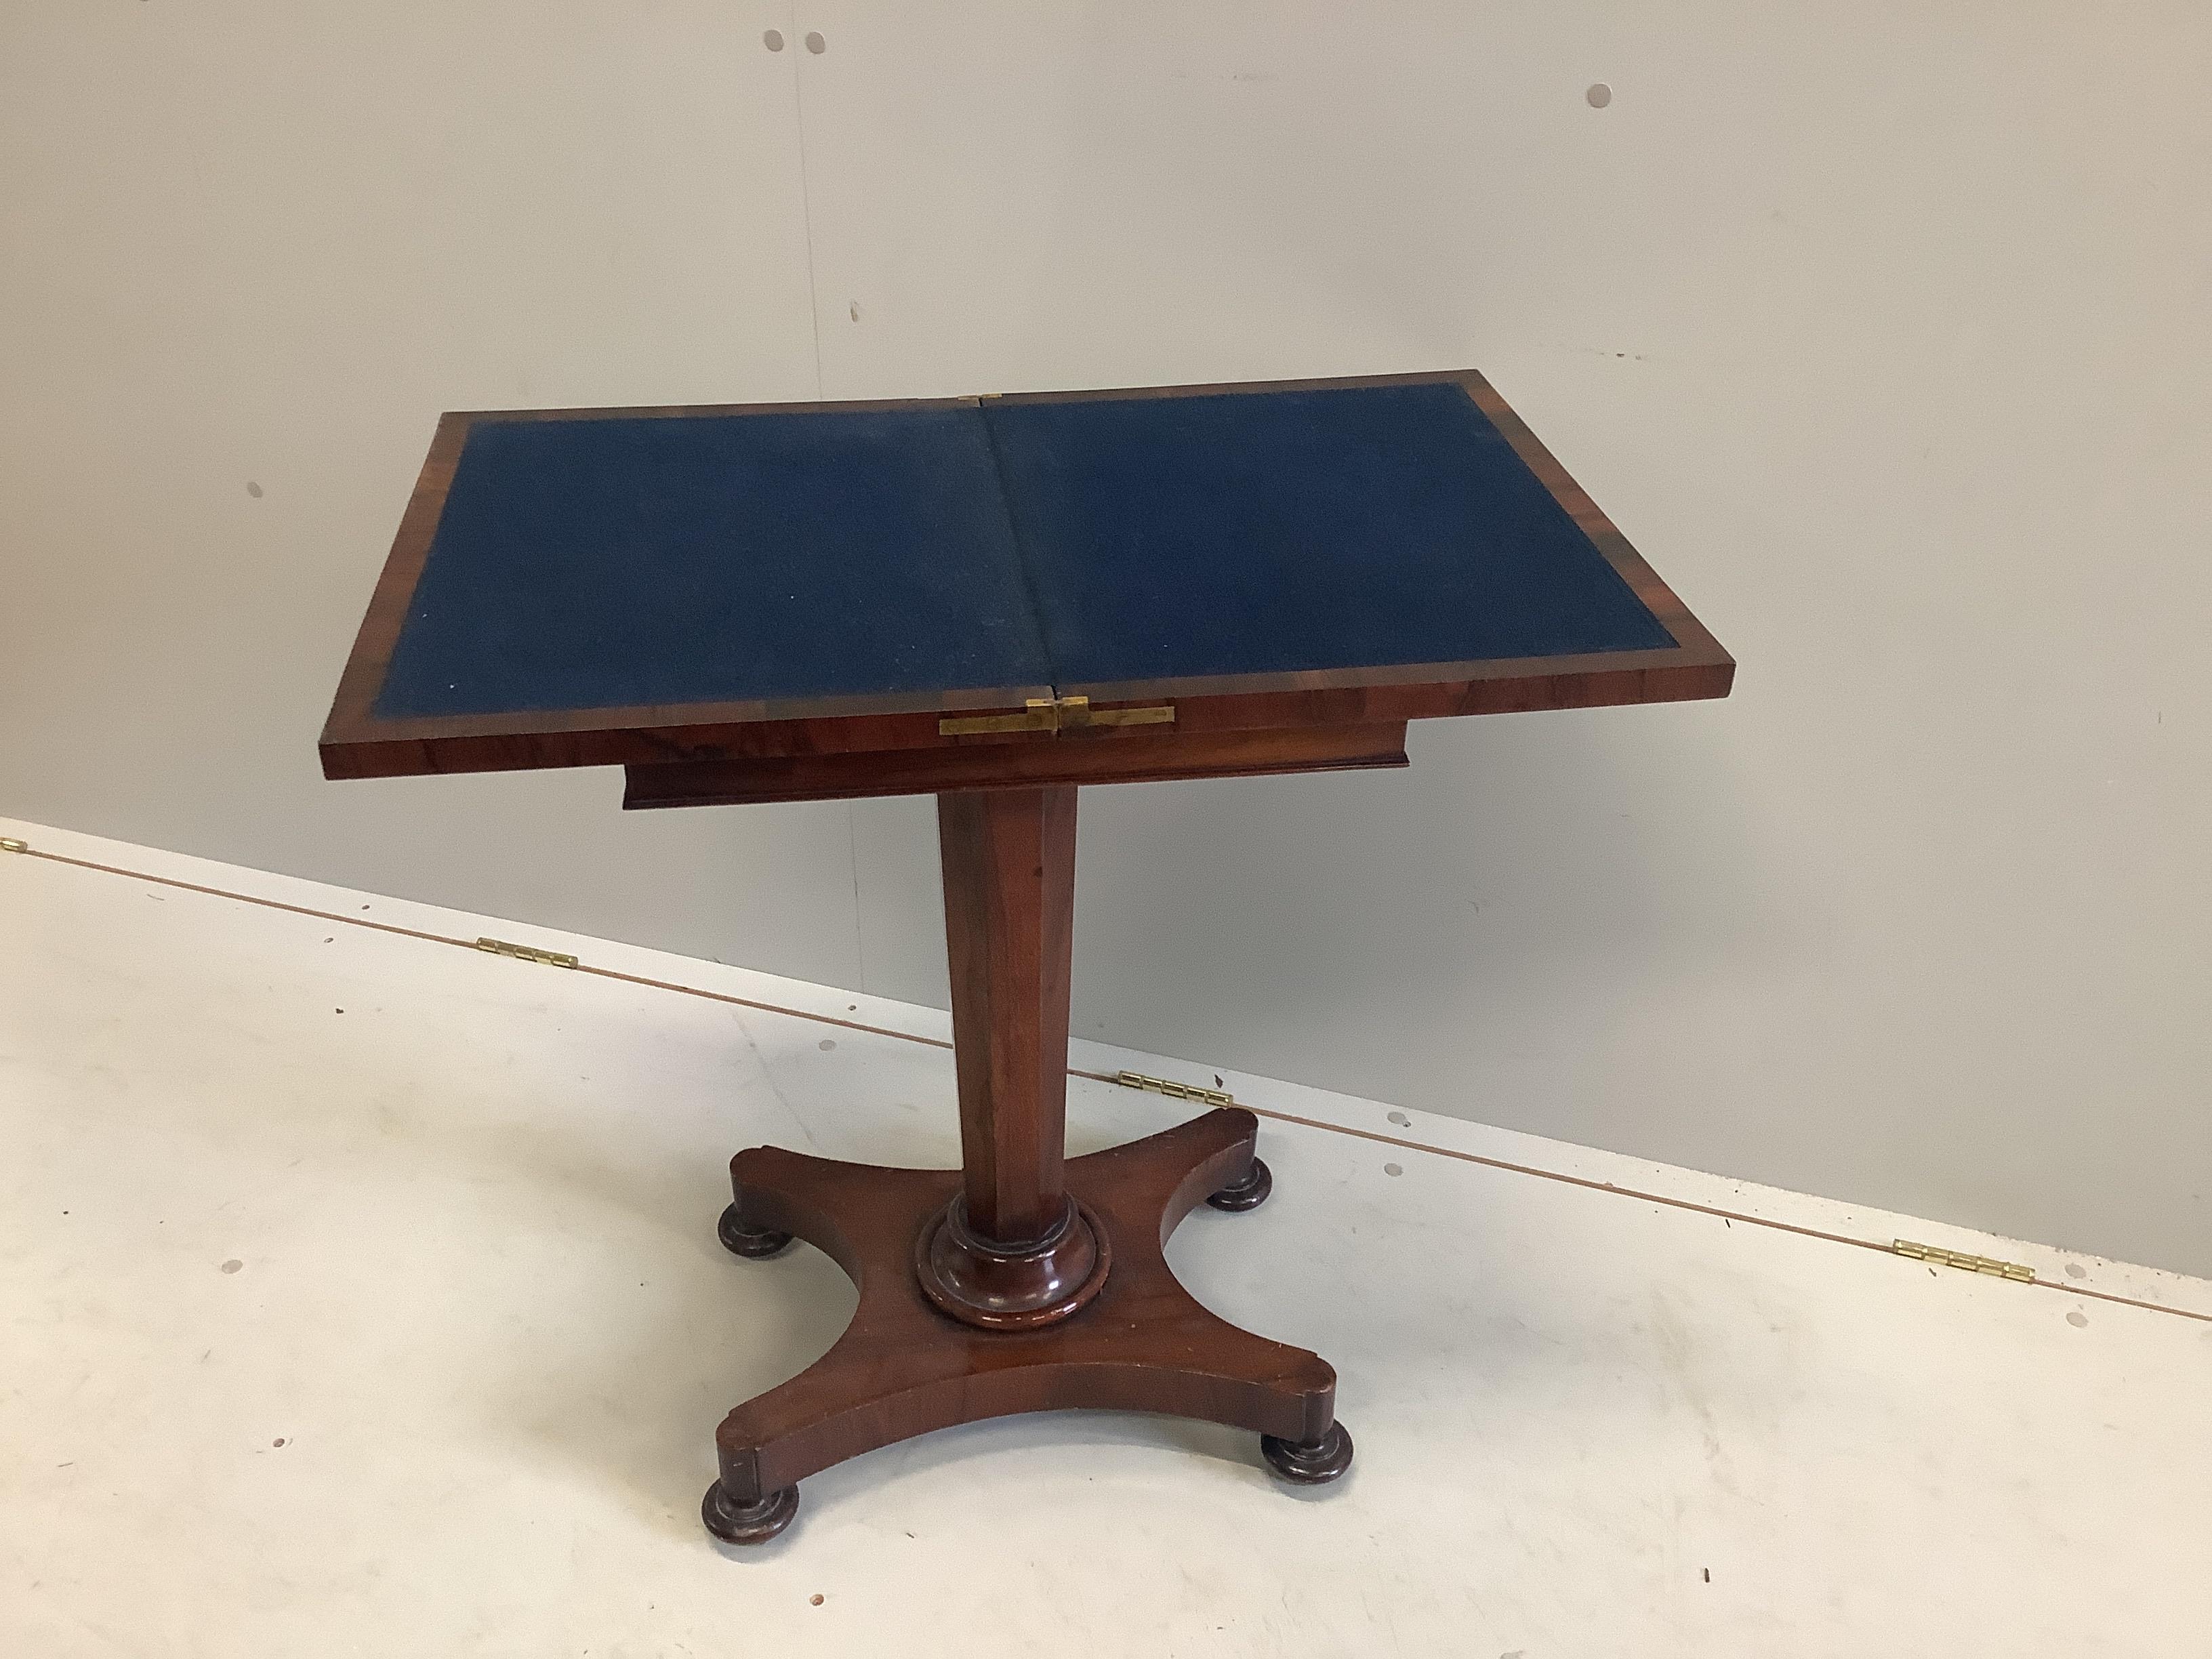 An early Victorian rectangular rosewood folding card table, width 46cm, depth 36cm, height 72cm